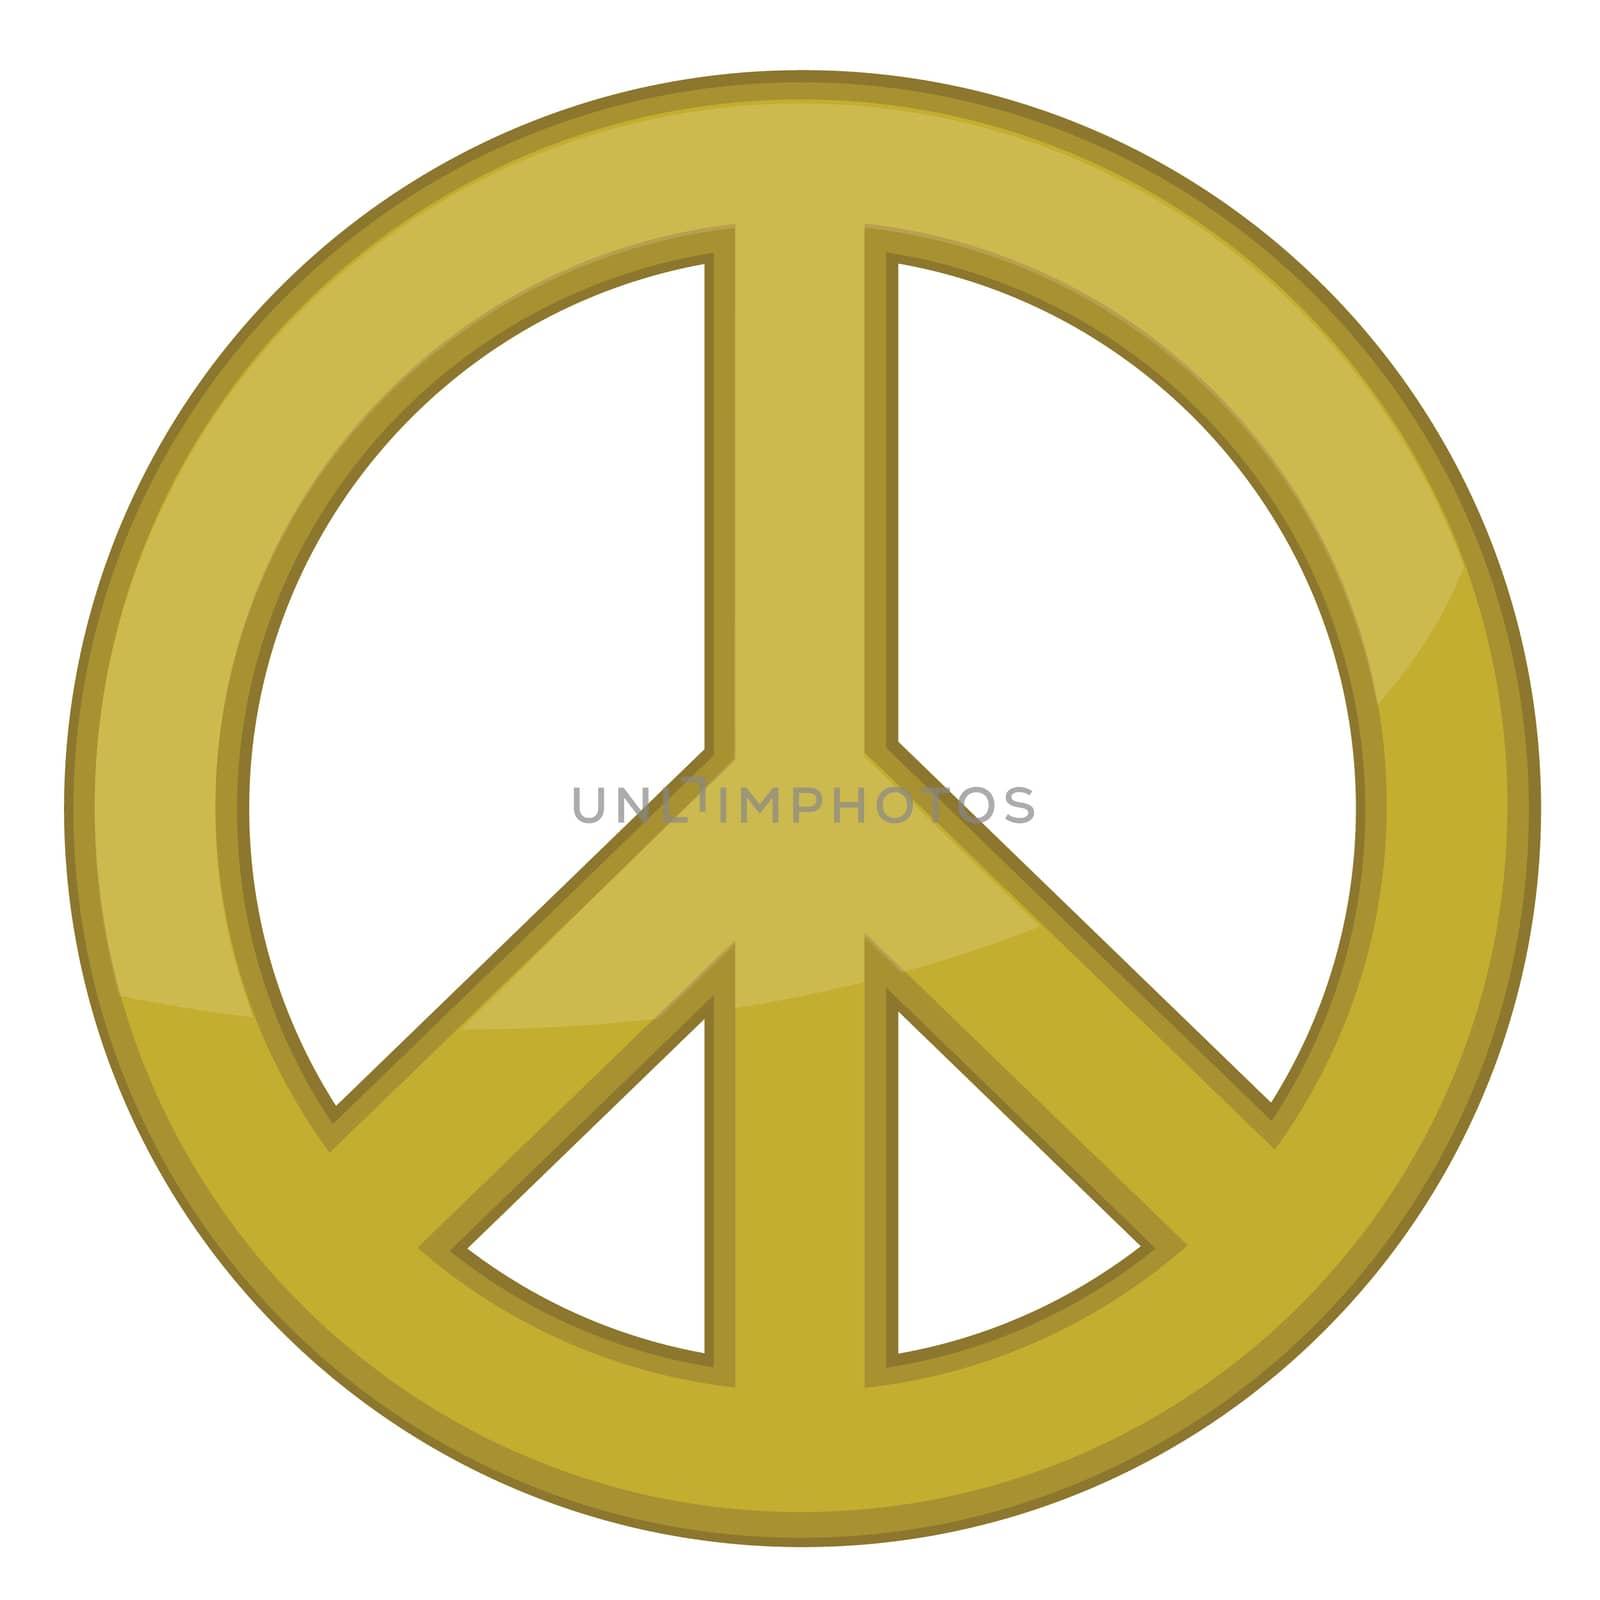 Peace sign illustration design